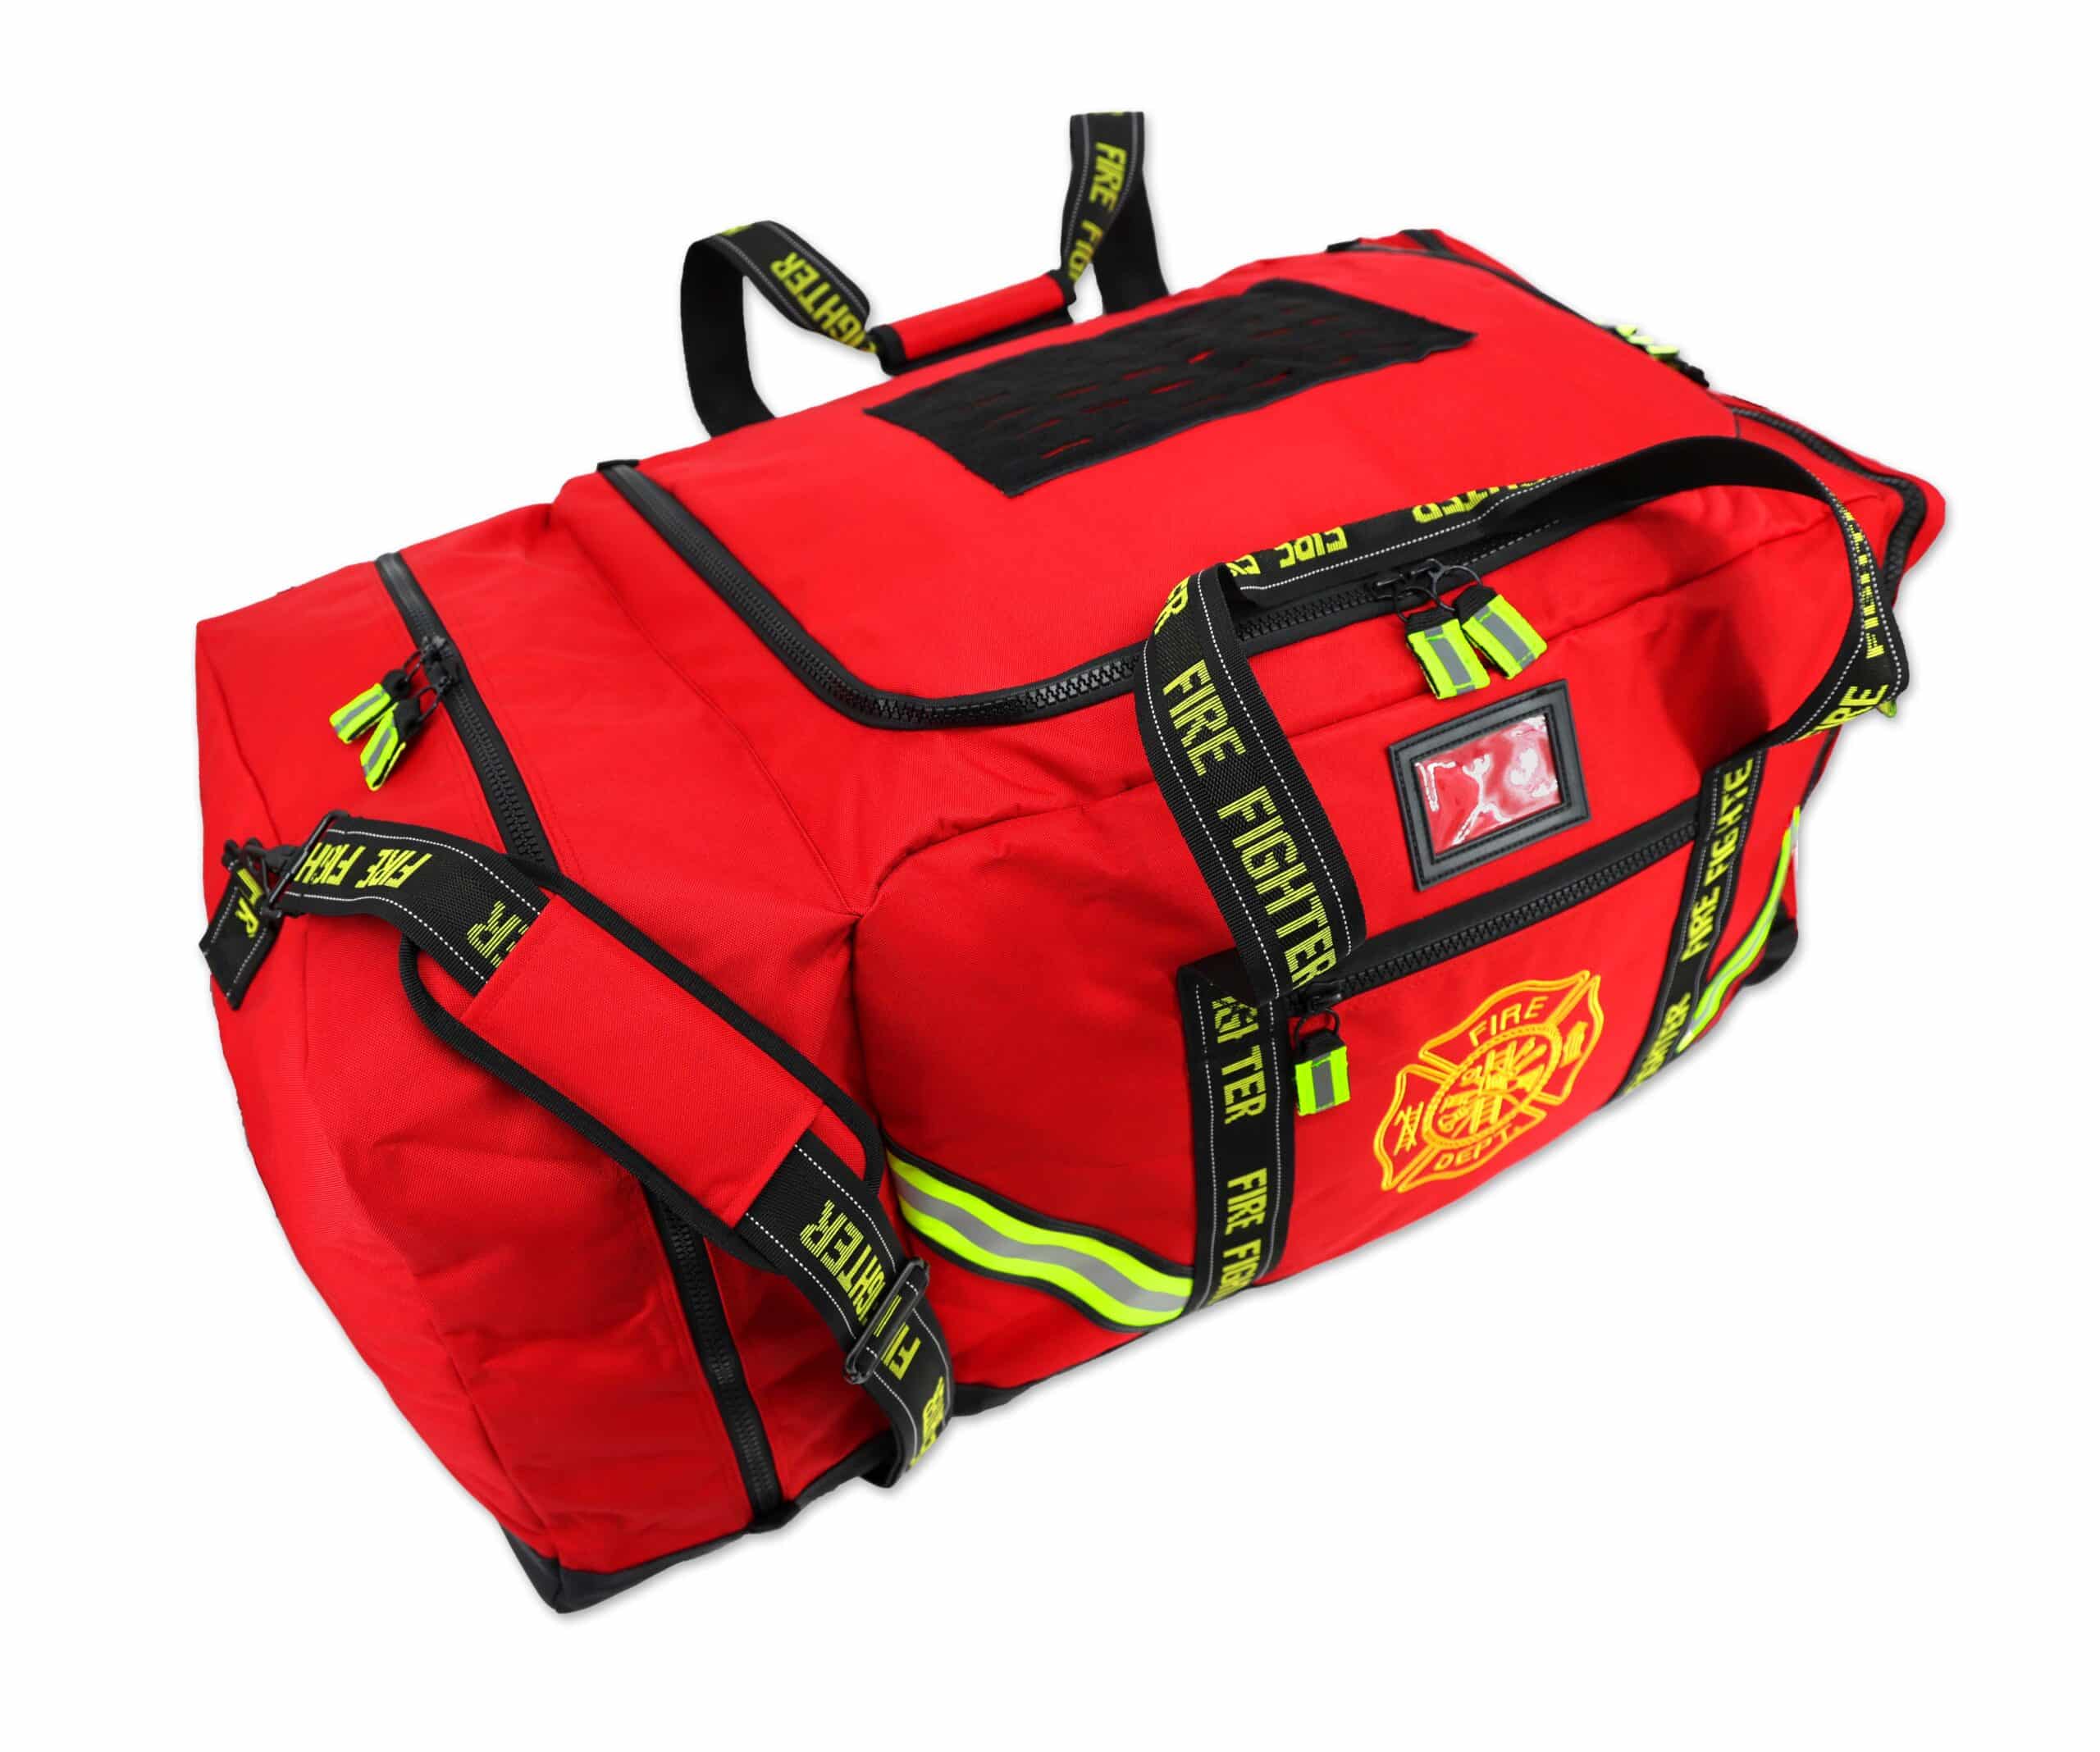 DR-XL Tool Storage Bag